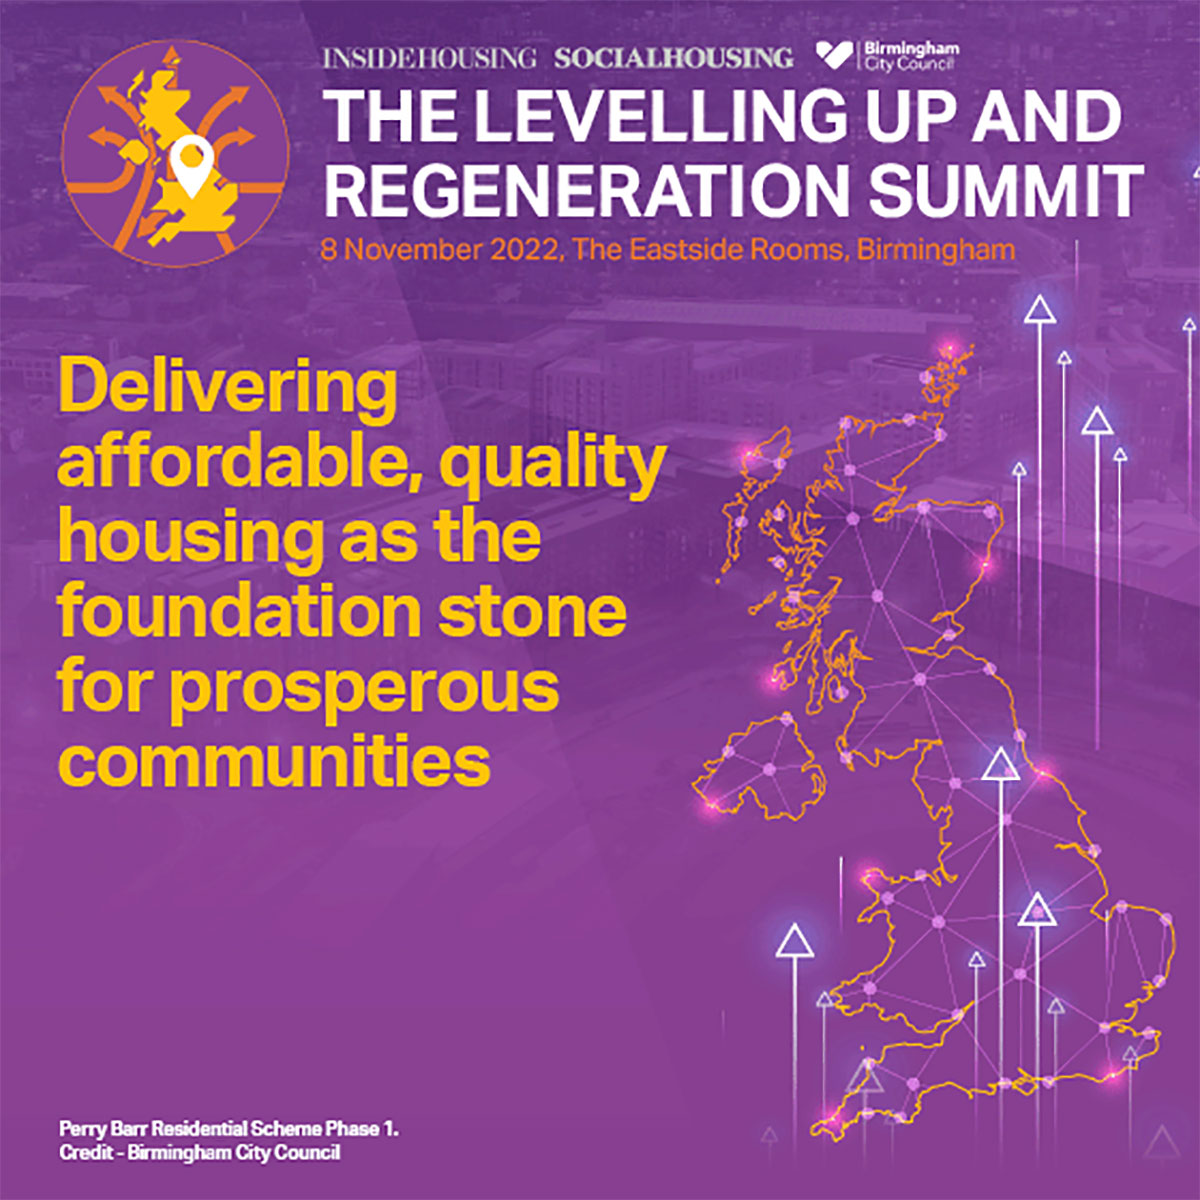 The Upgrade and Regeneration Summit